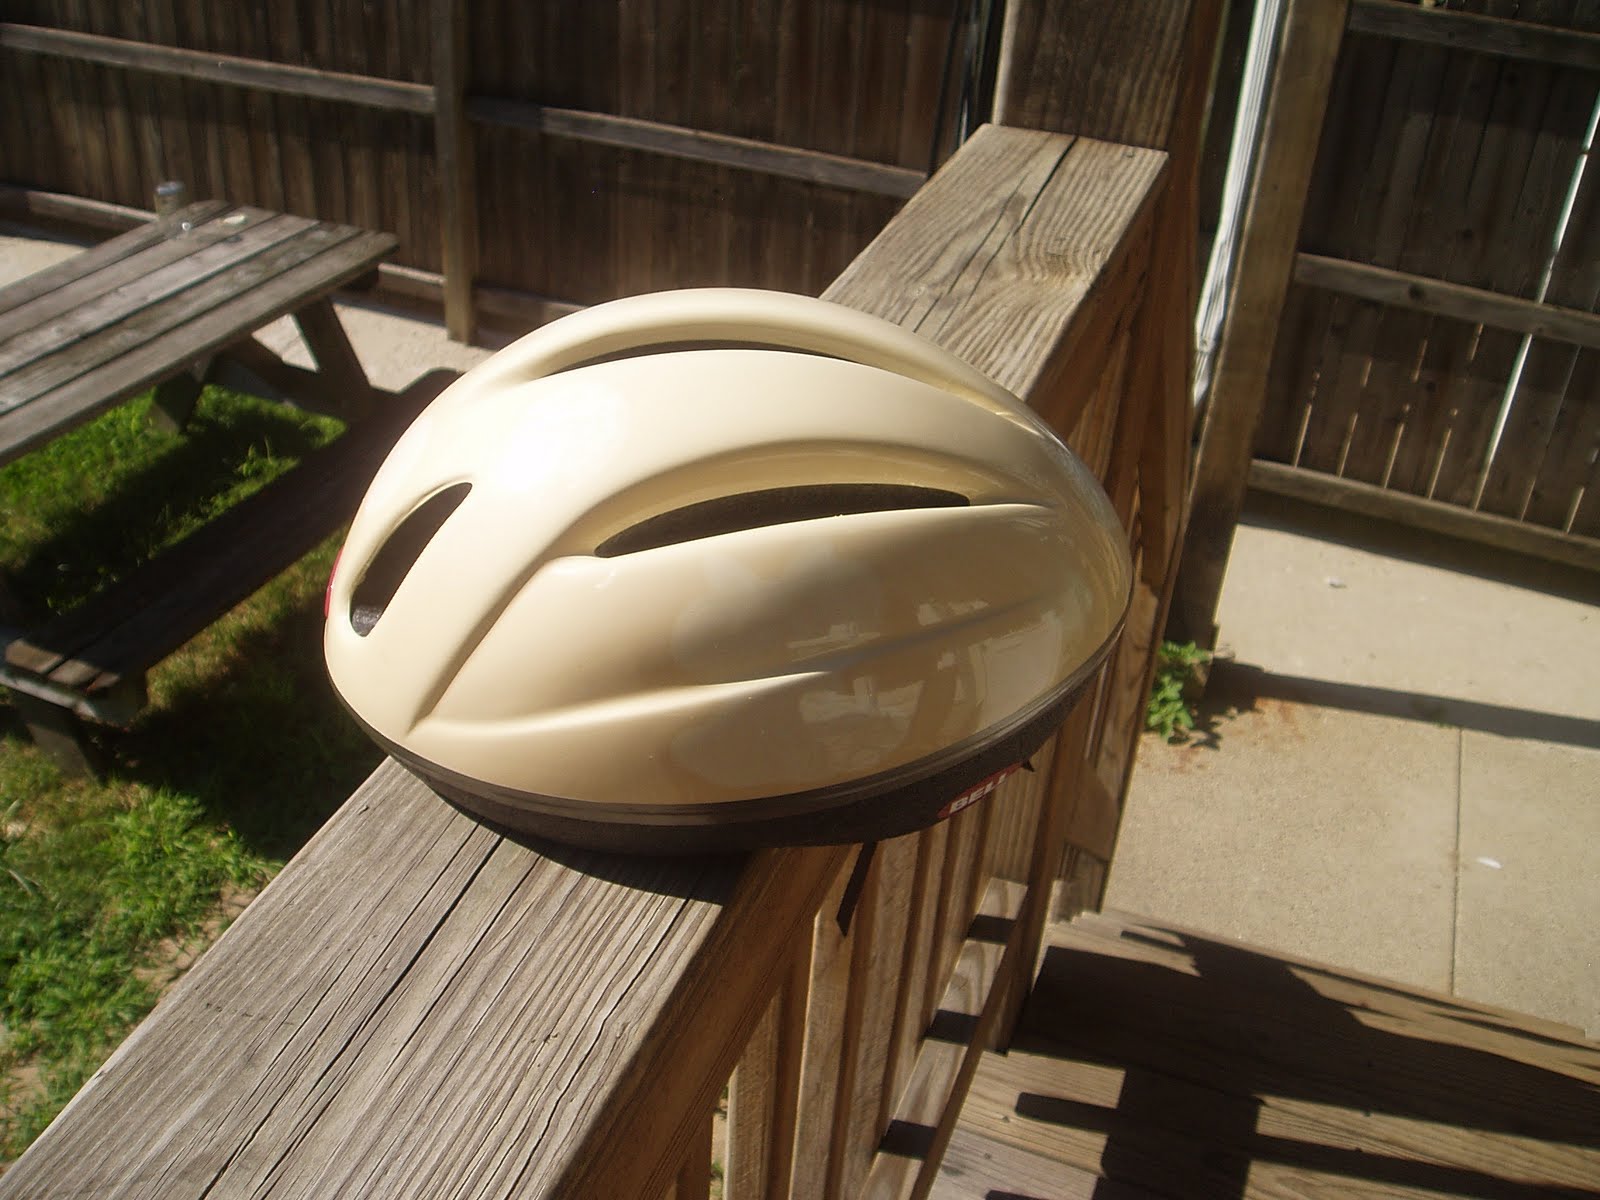 Bike Helmet Template